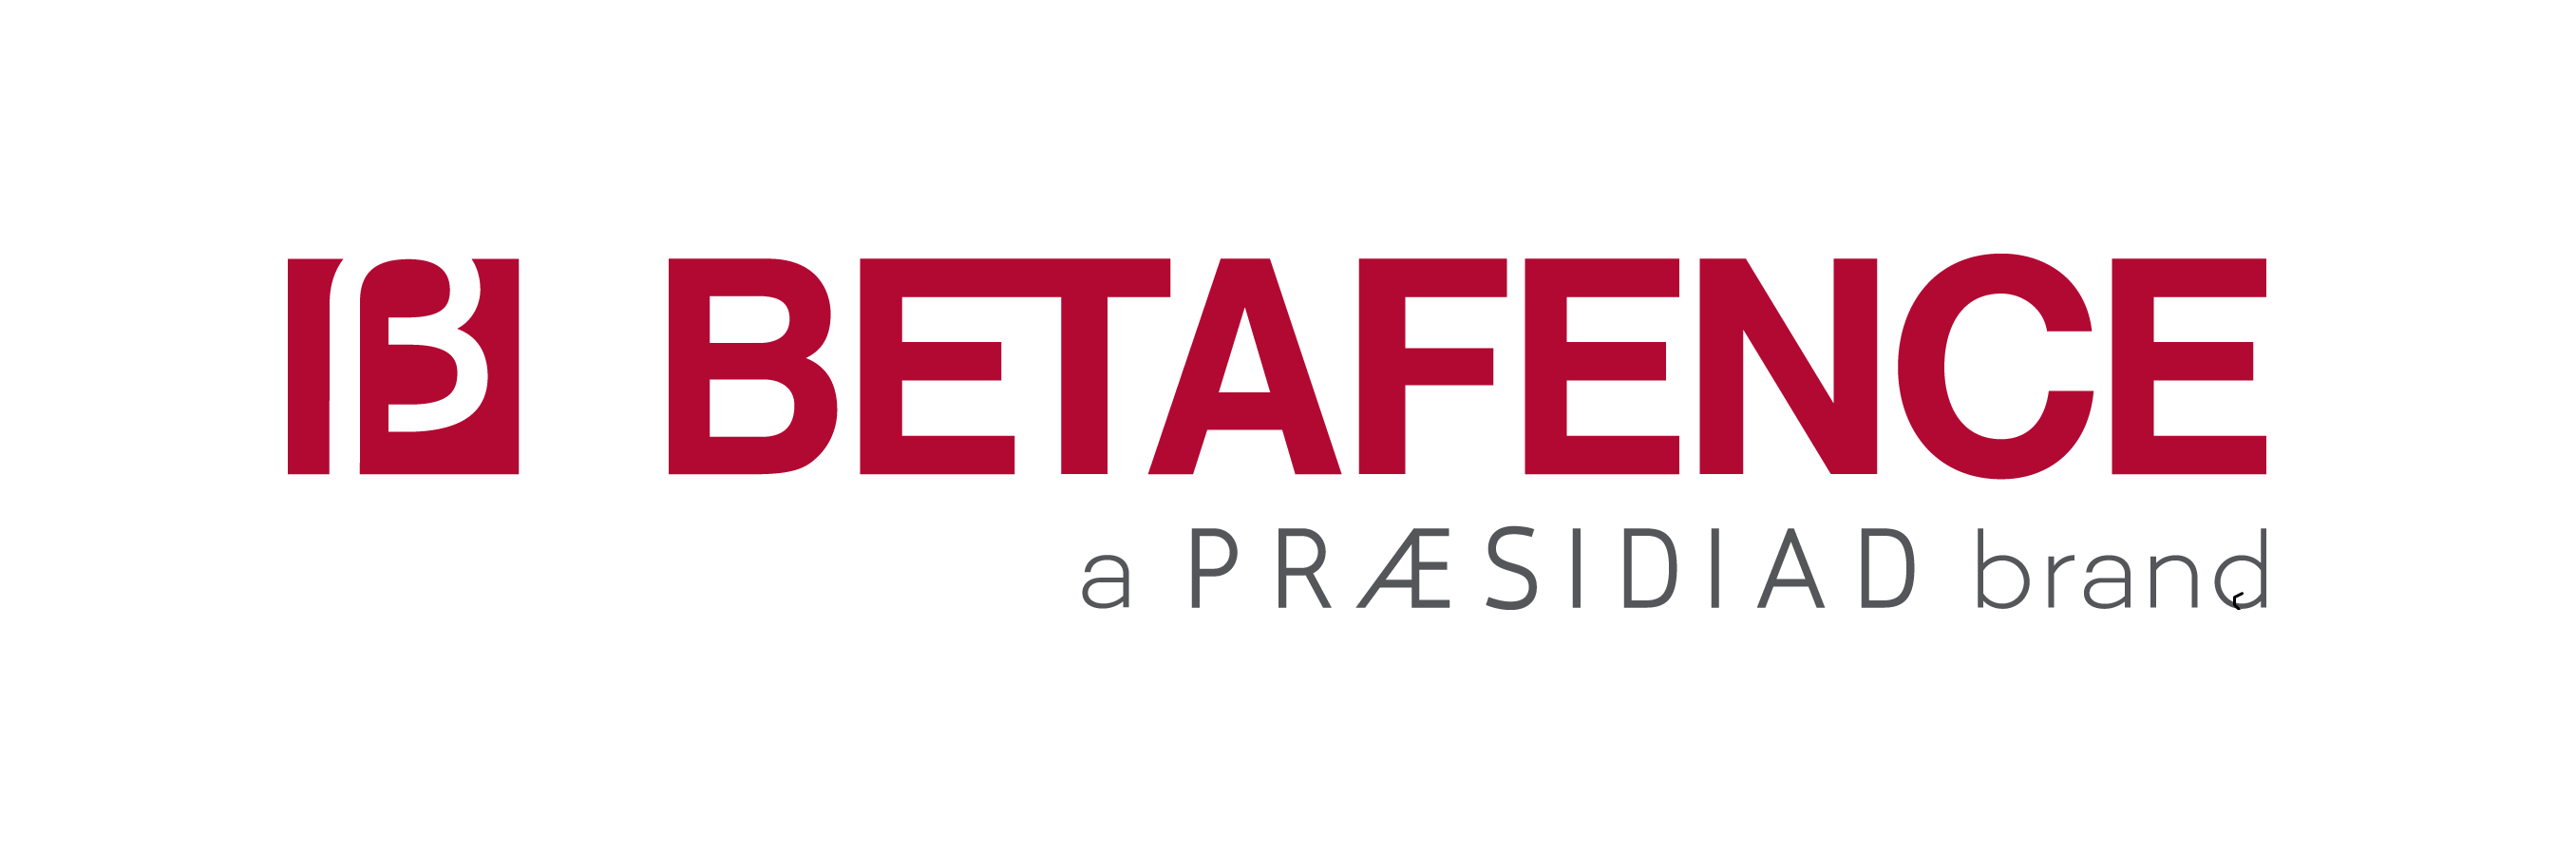 betafence logo